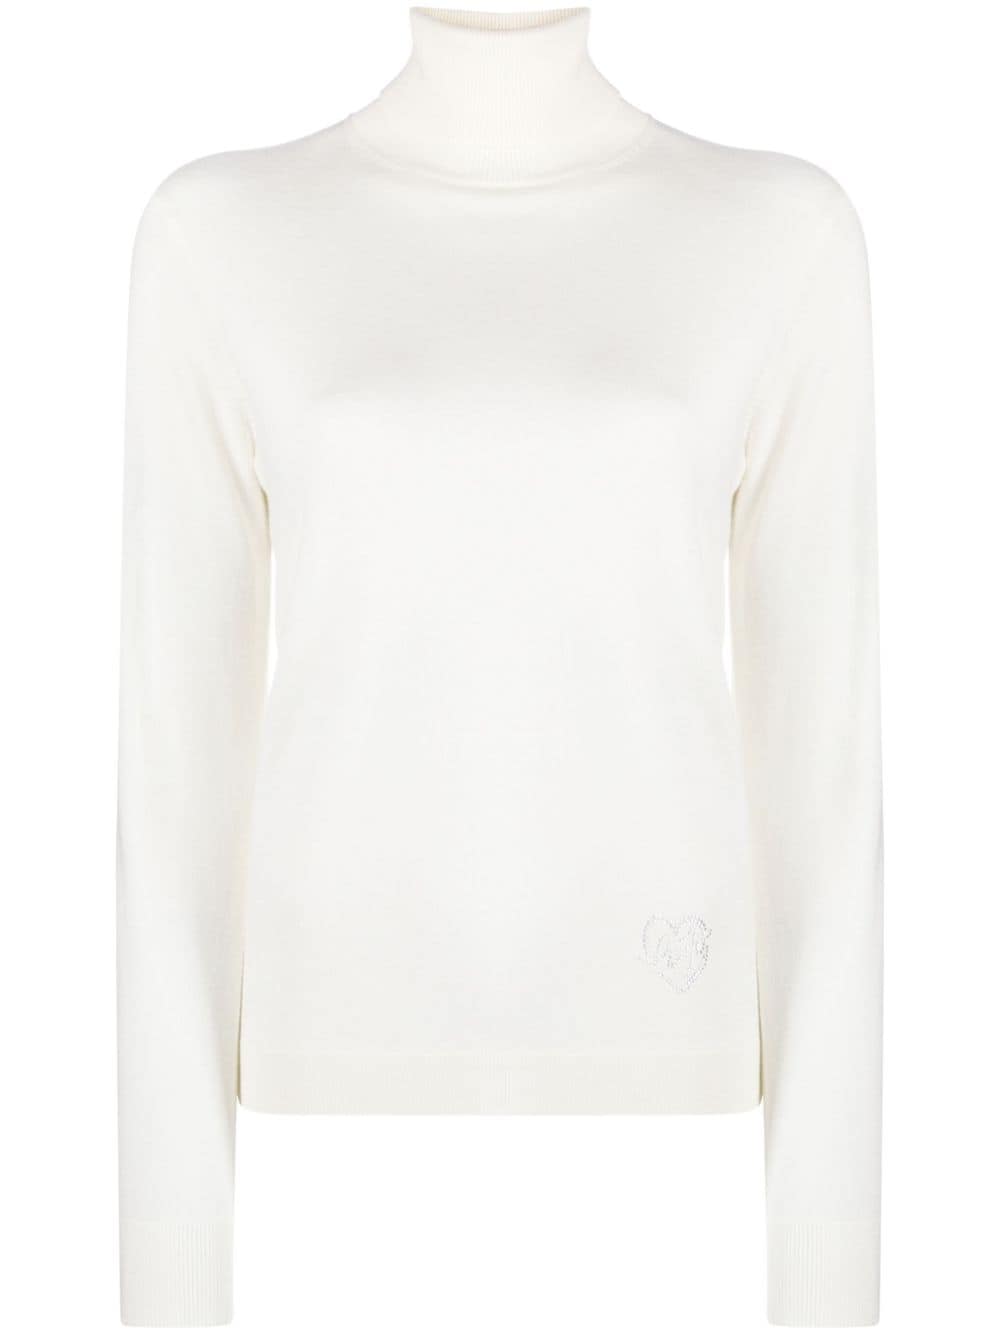 LIU JO crystal-embellished logo jumper - White